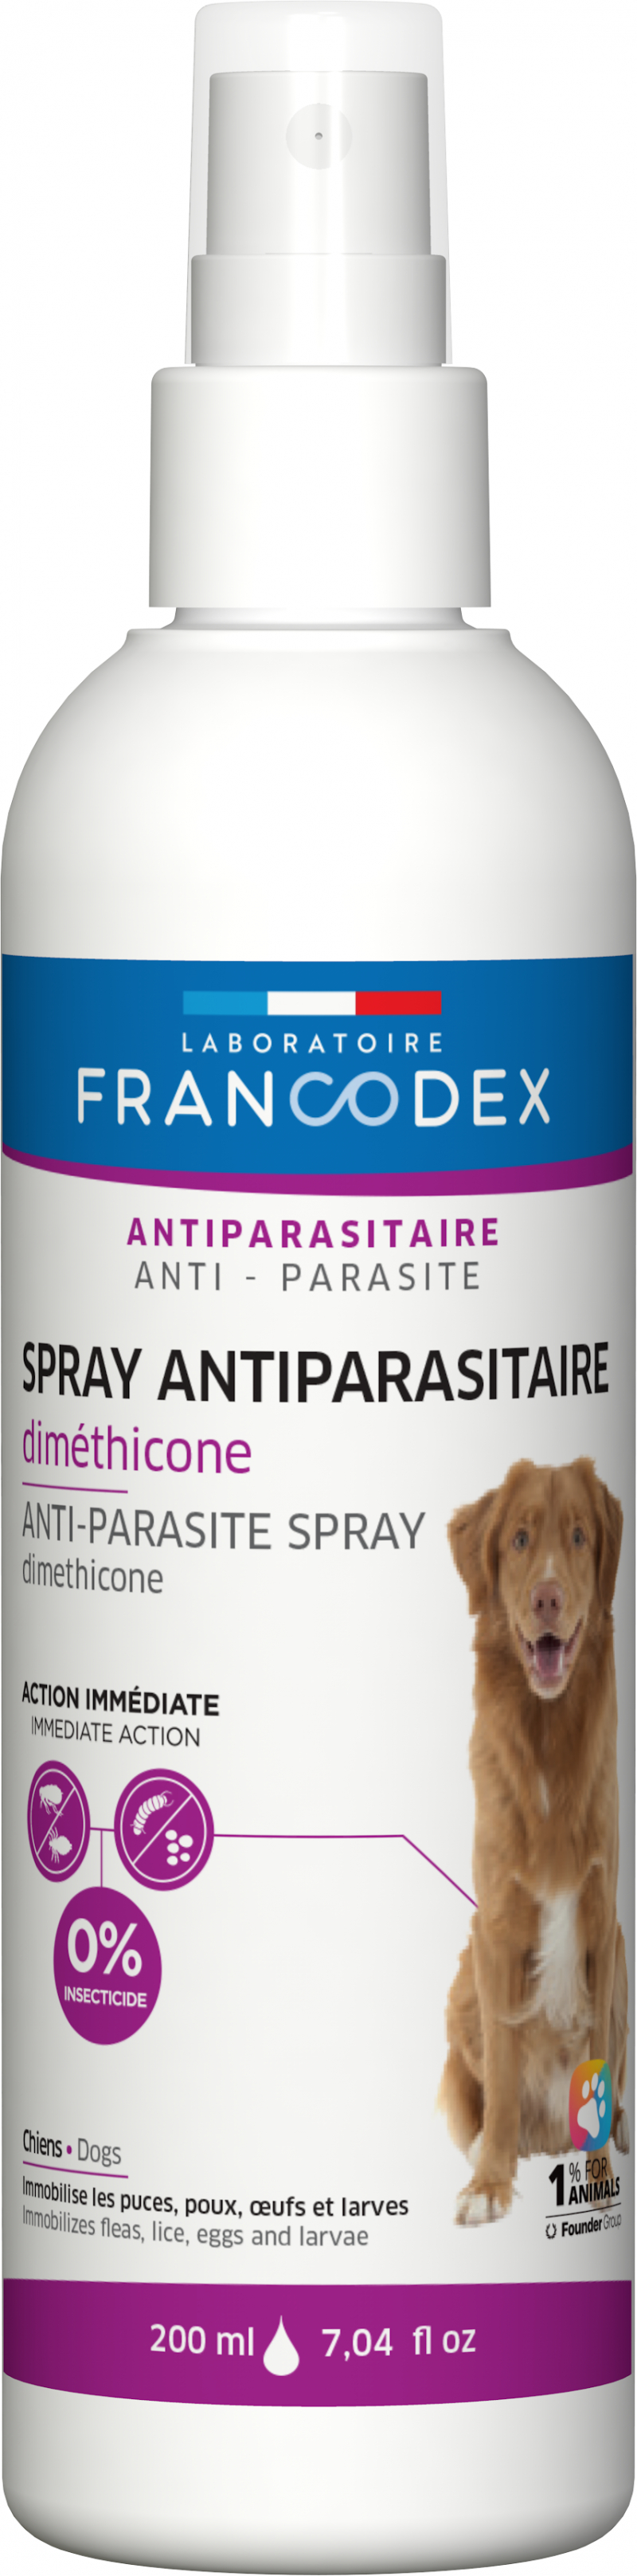 Francodex Spray Dimethicone pour Chien